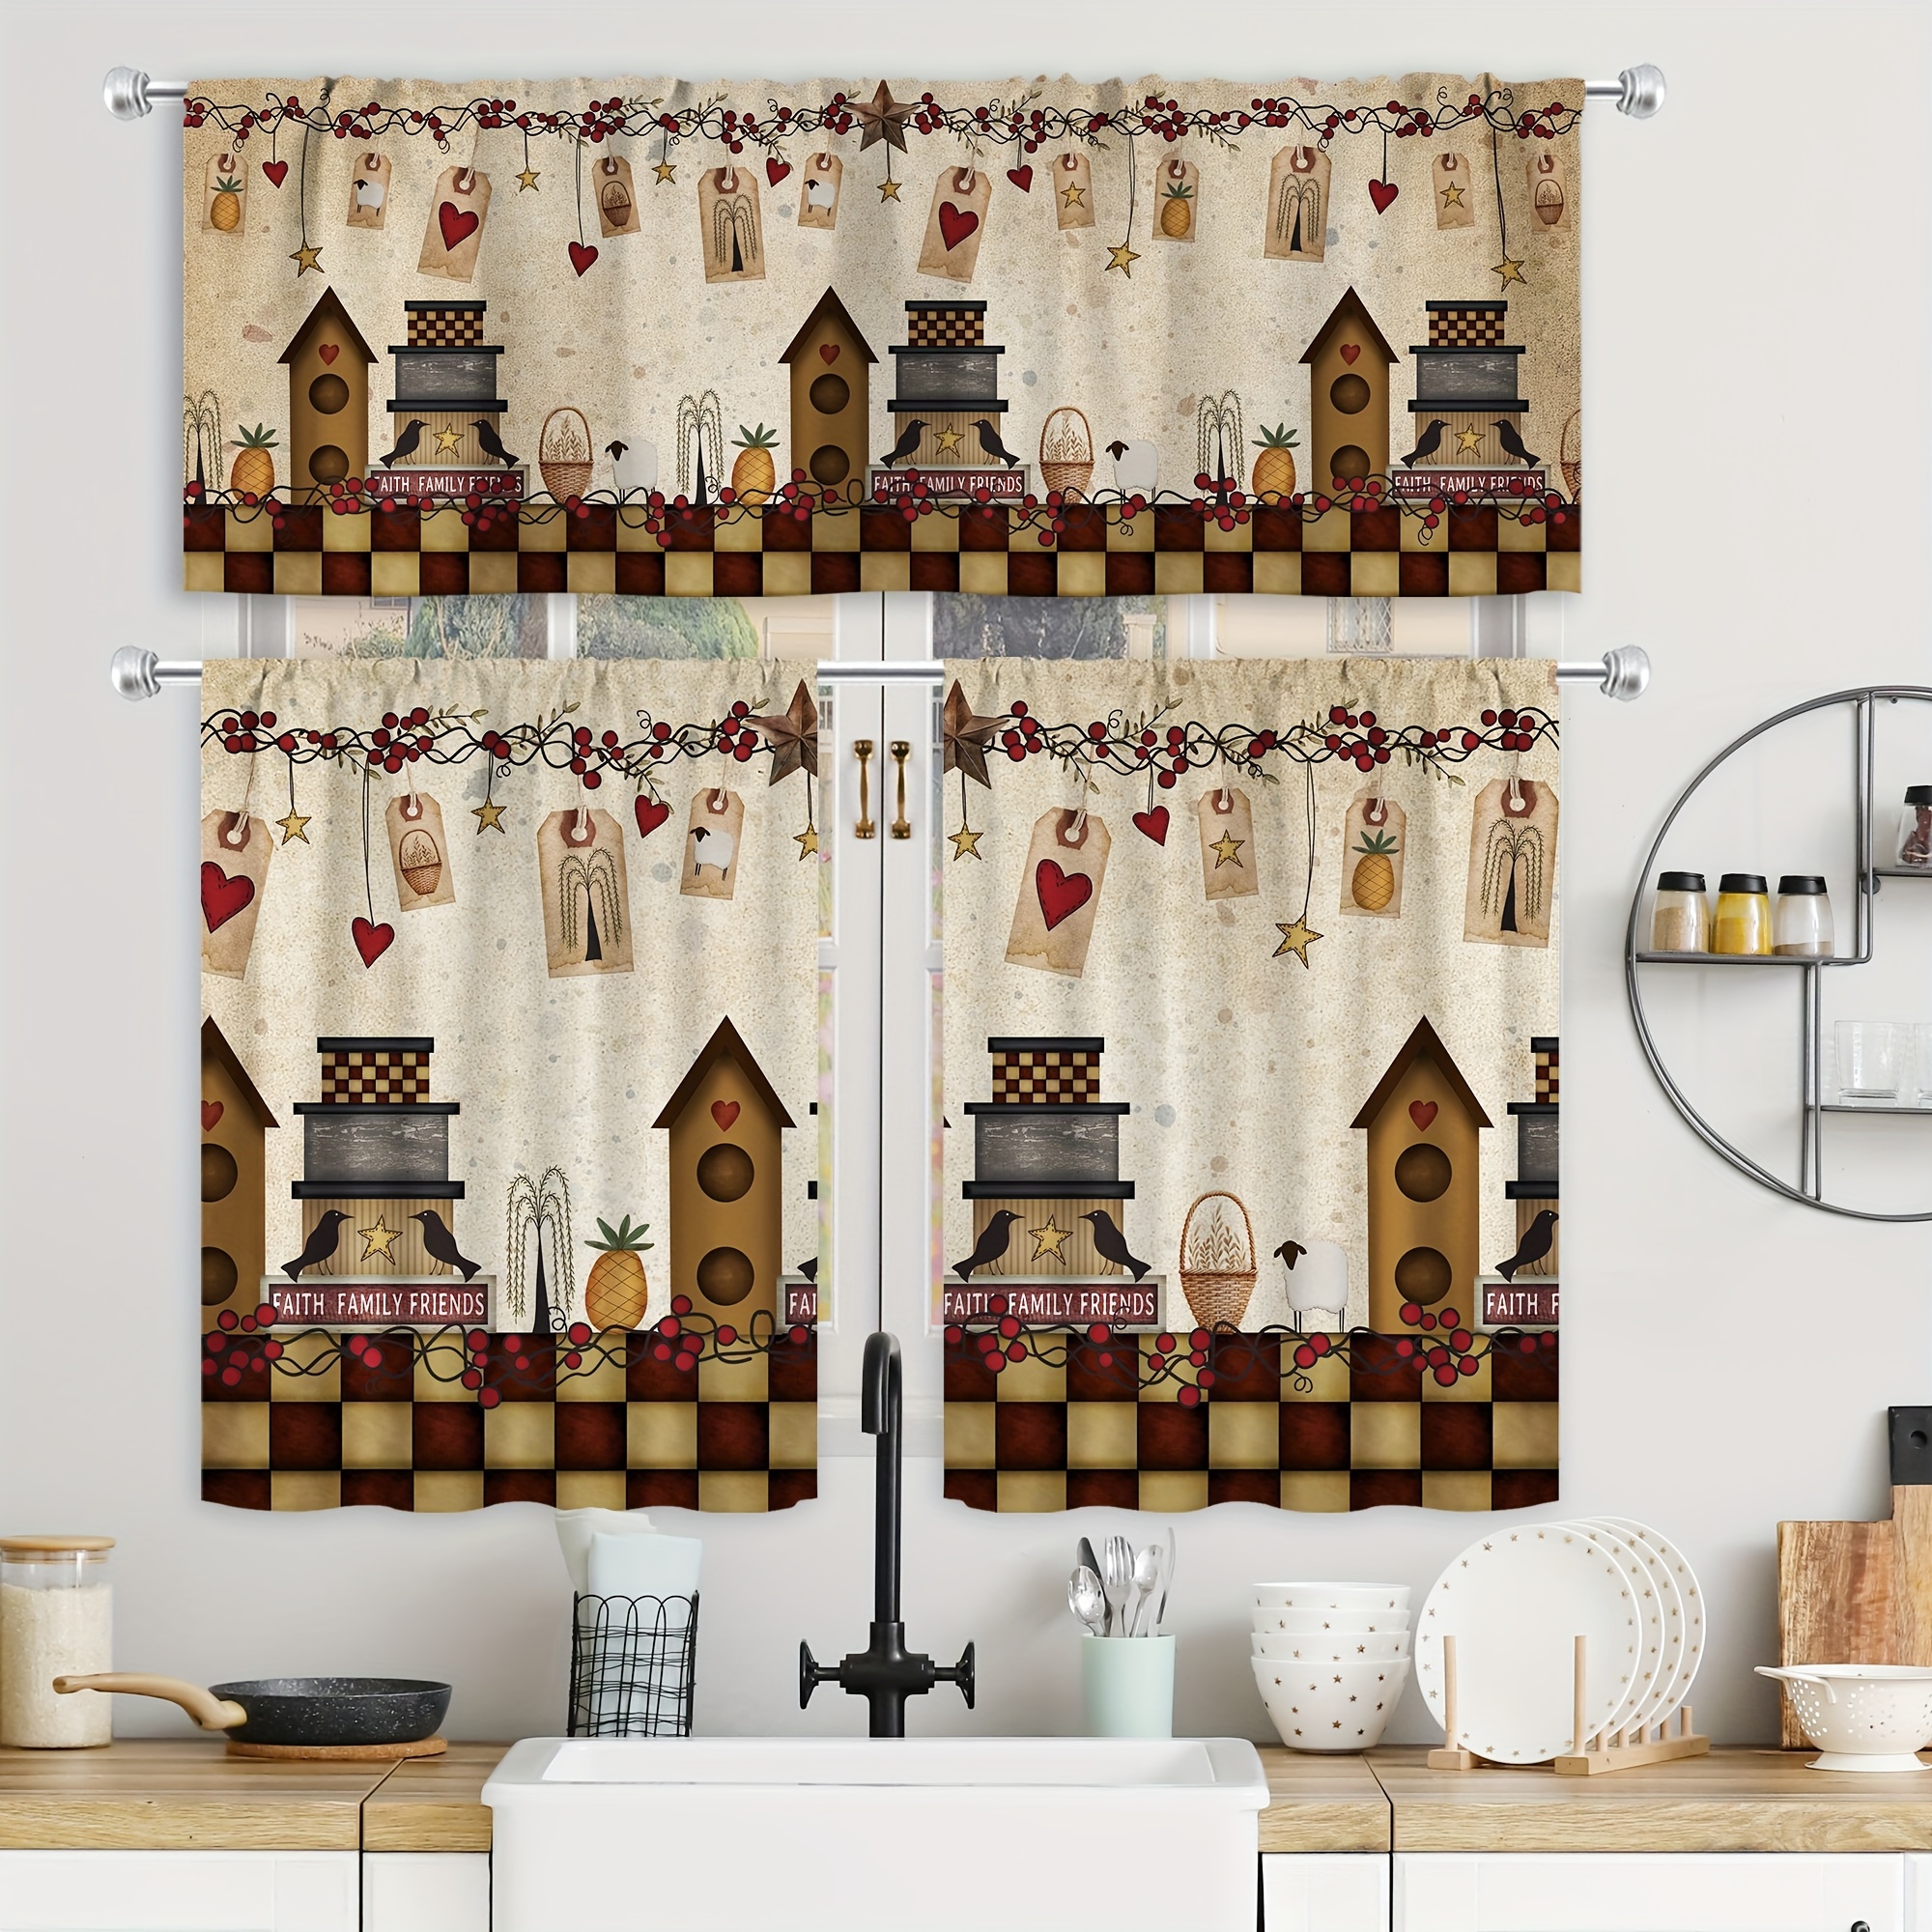 Cortinas cortas para ventanas pequeñas, cortina crisse, cortina de cocina  corta 150l * 77hcm, patrón de girasol de algodón natural lino café cortina  deslizante